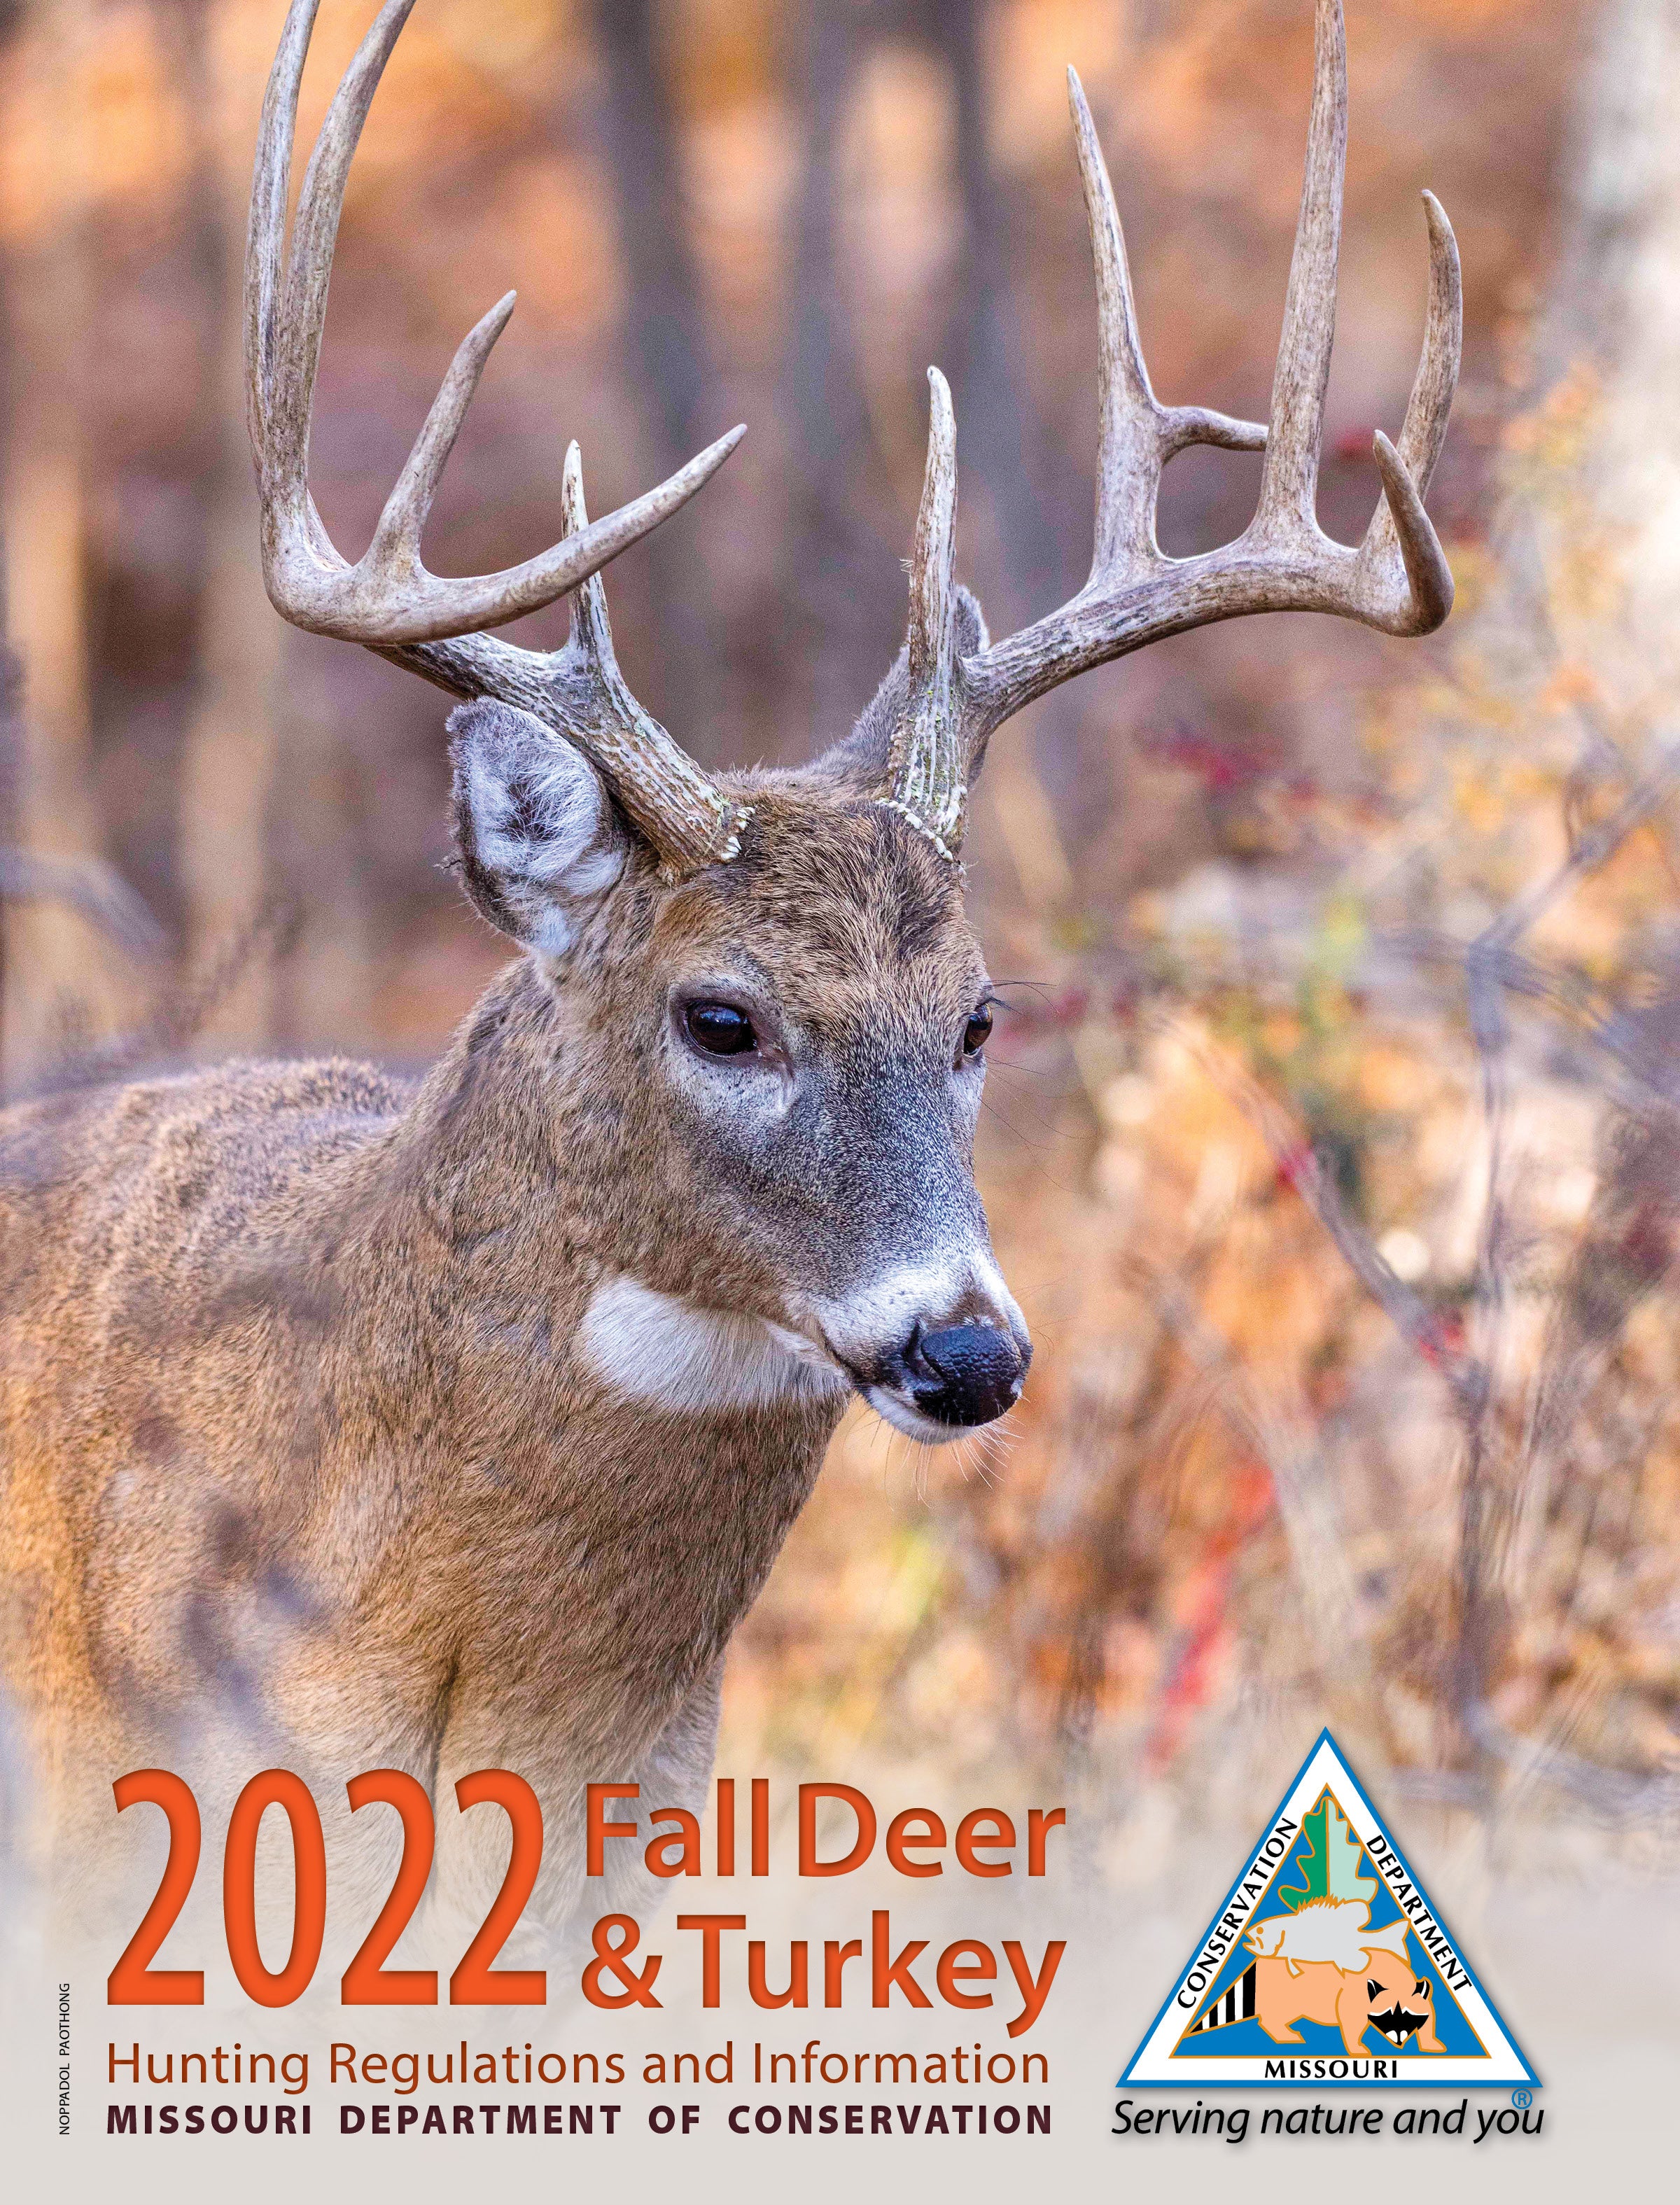 MDC shares key information for deer season Missouri